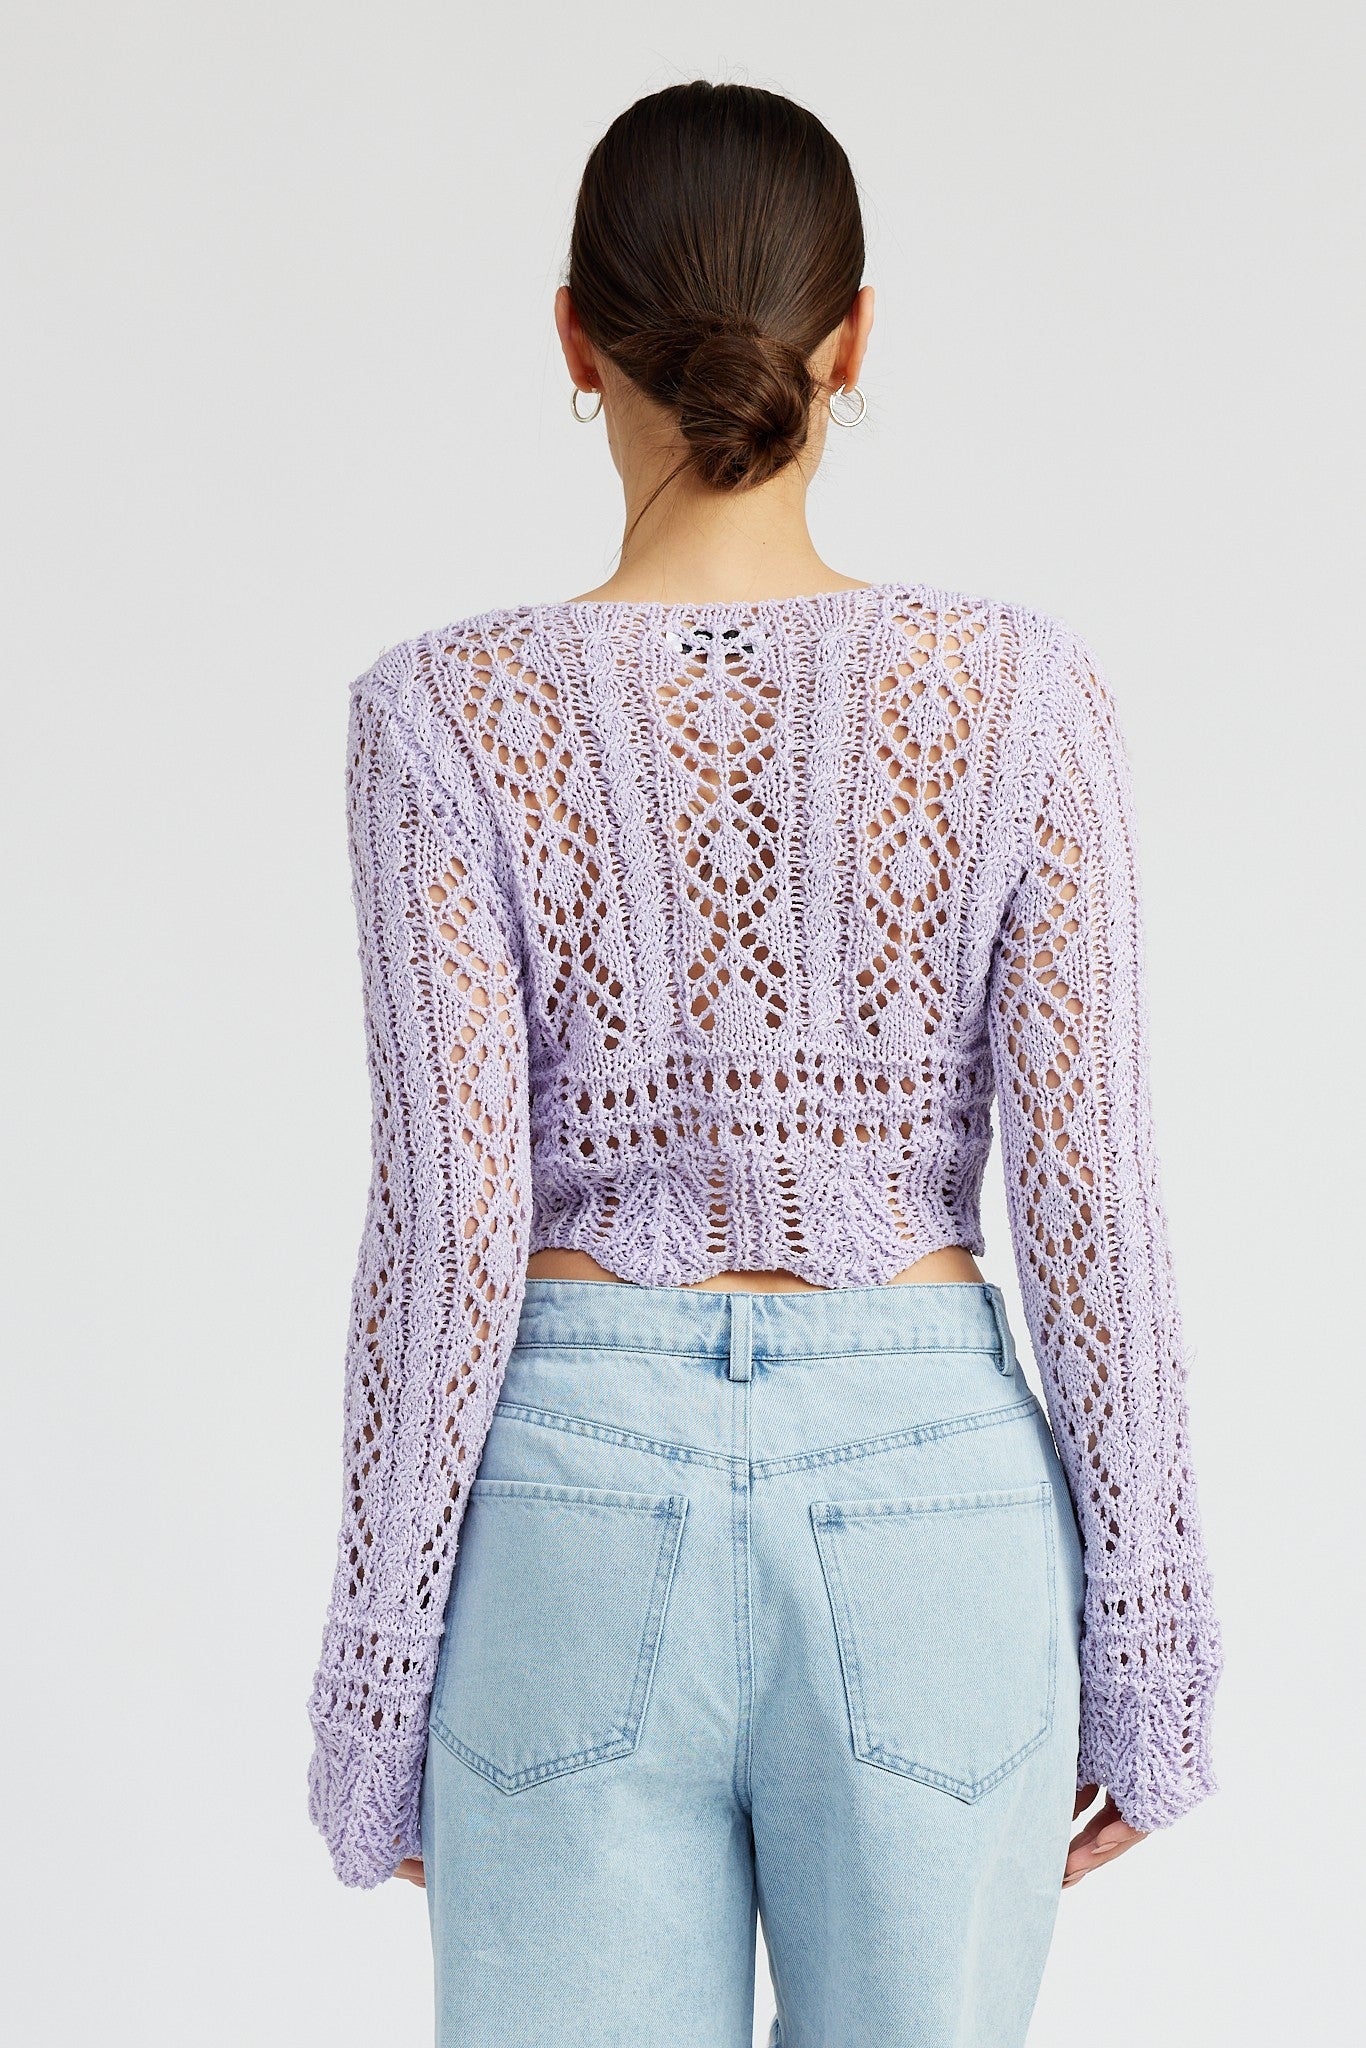 Lavender Lace Cropped Crochet Top